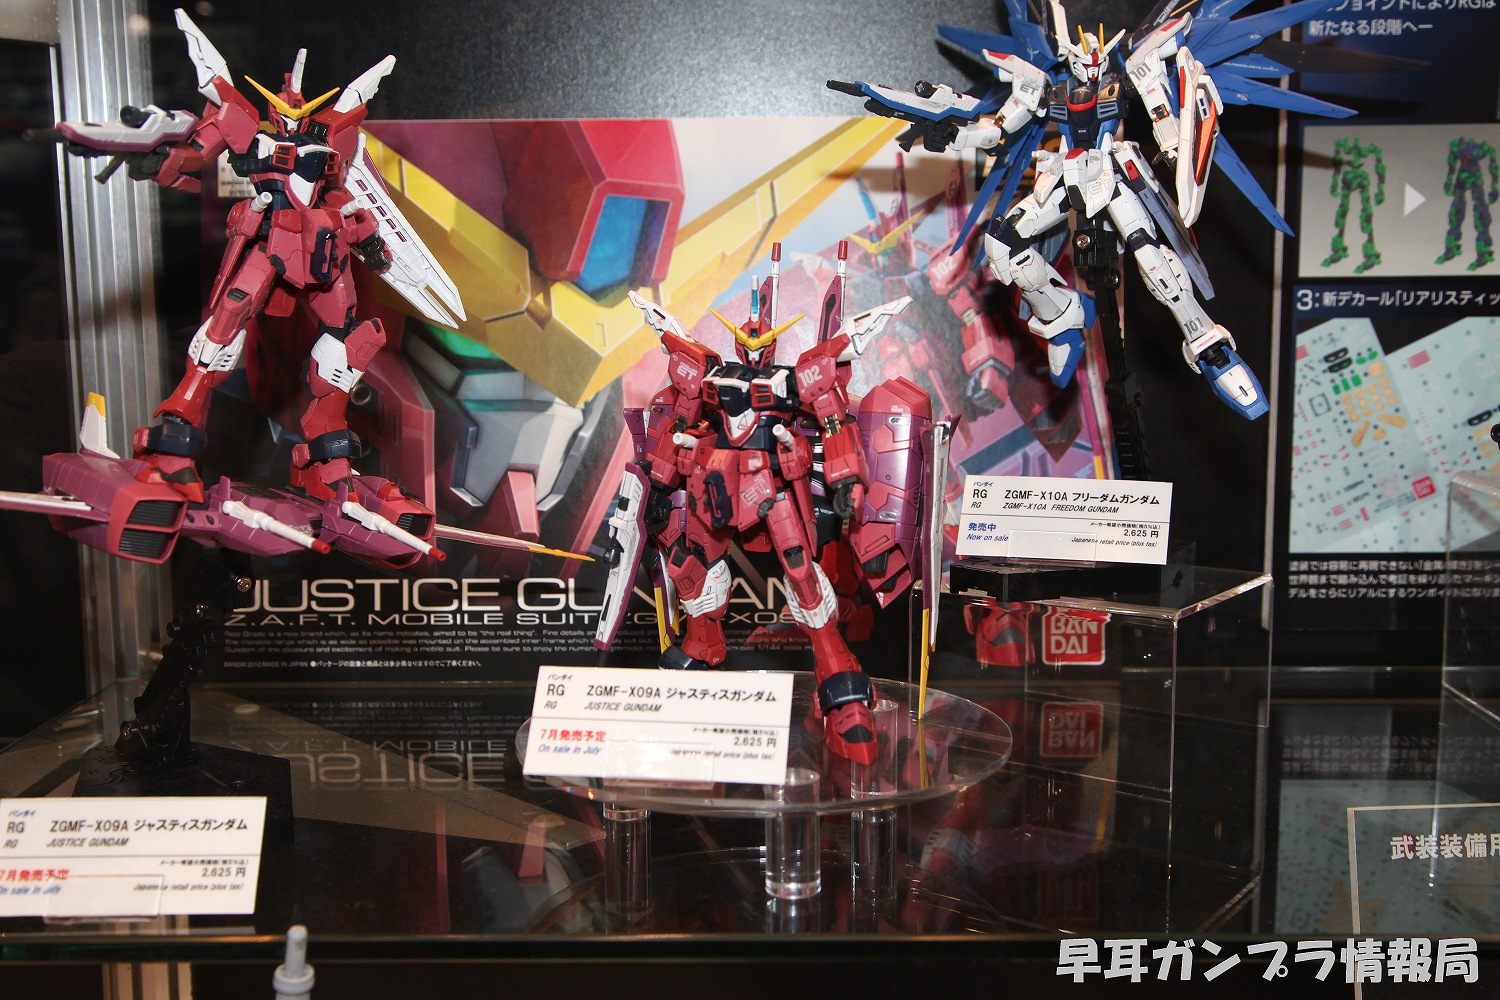 GUNDAM GUY: RG 1/144 Justice Gundam - Wallpaper Size Images @ Tokyo ...